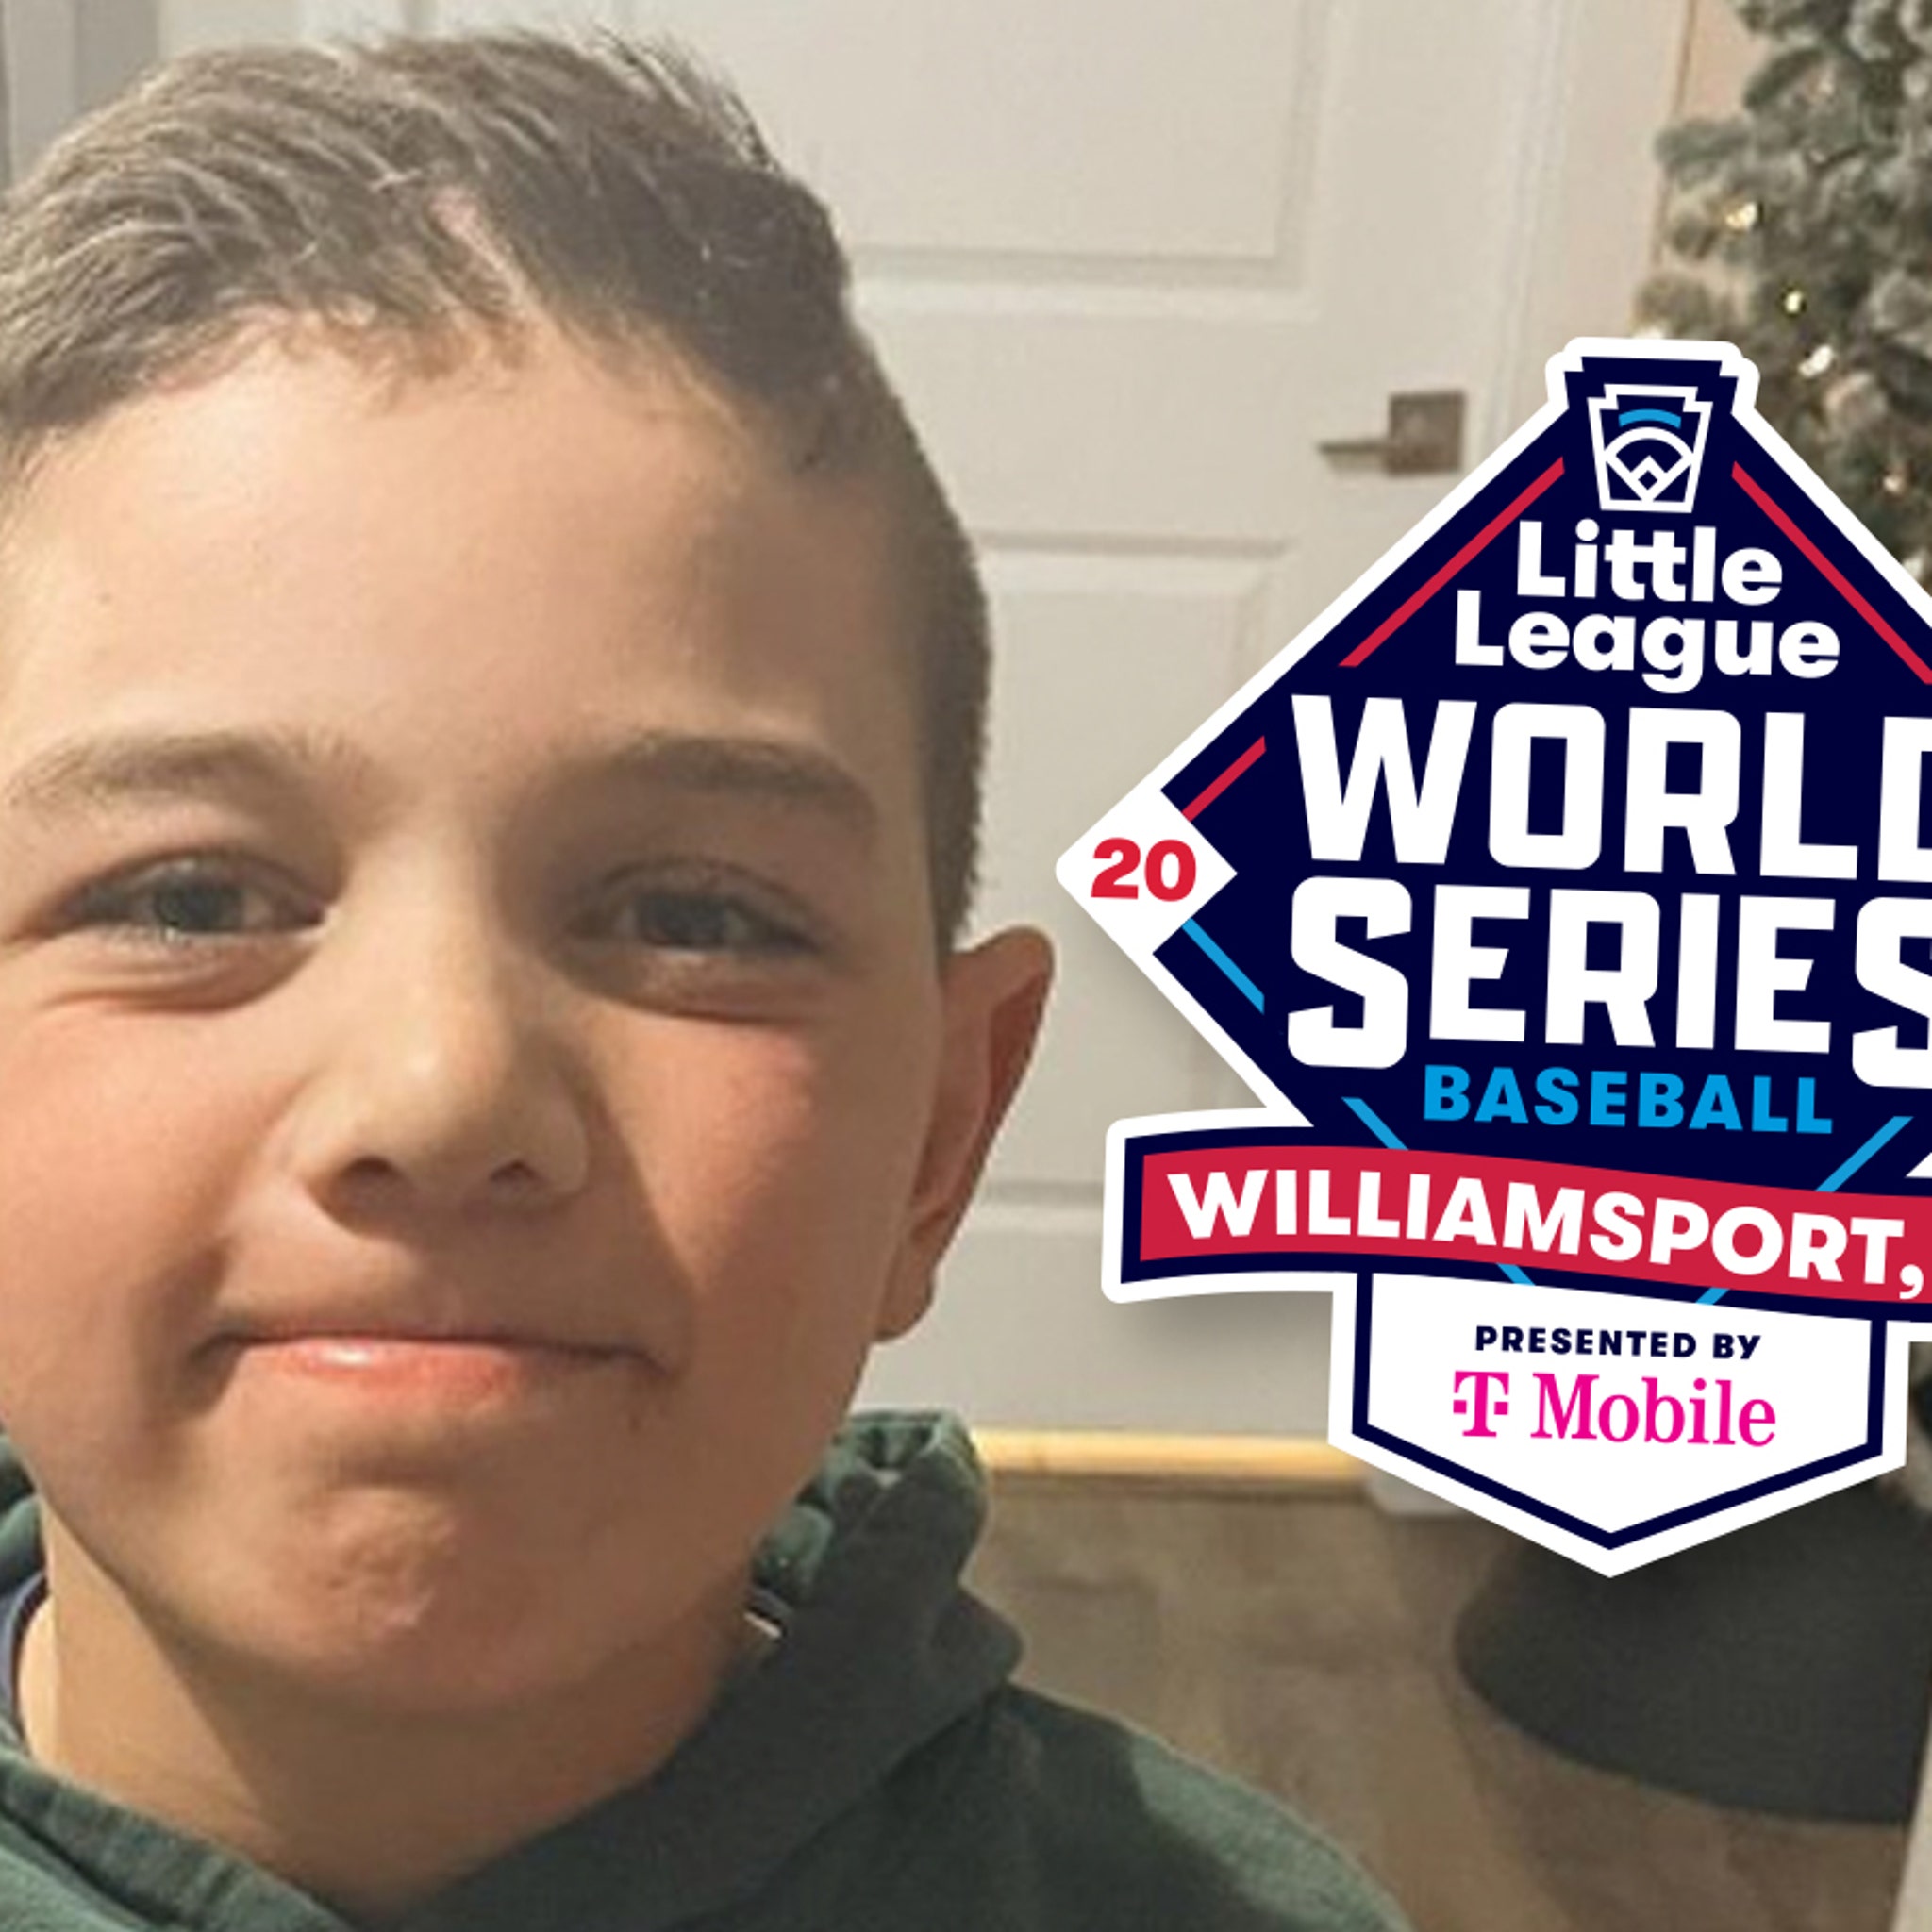 Little League World Series Baseball 2022 - IGN